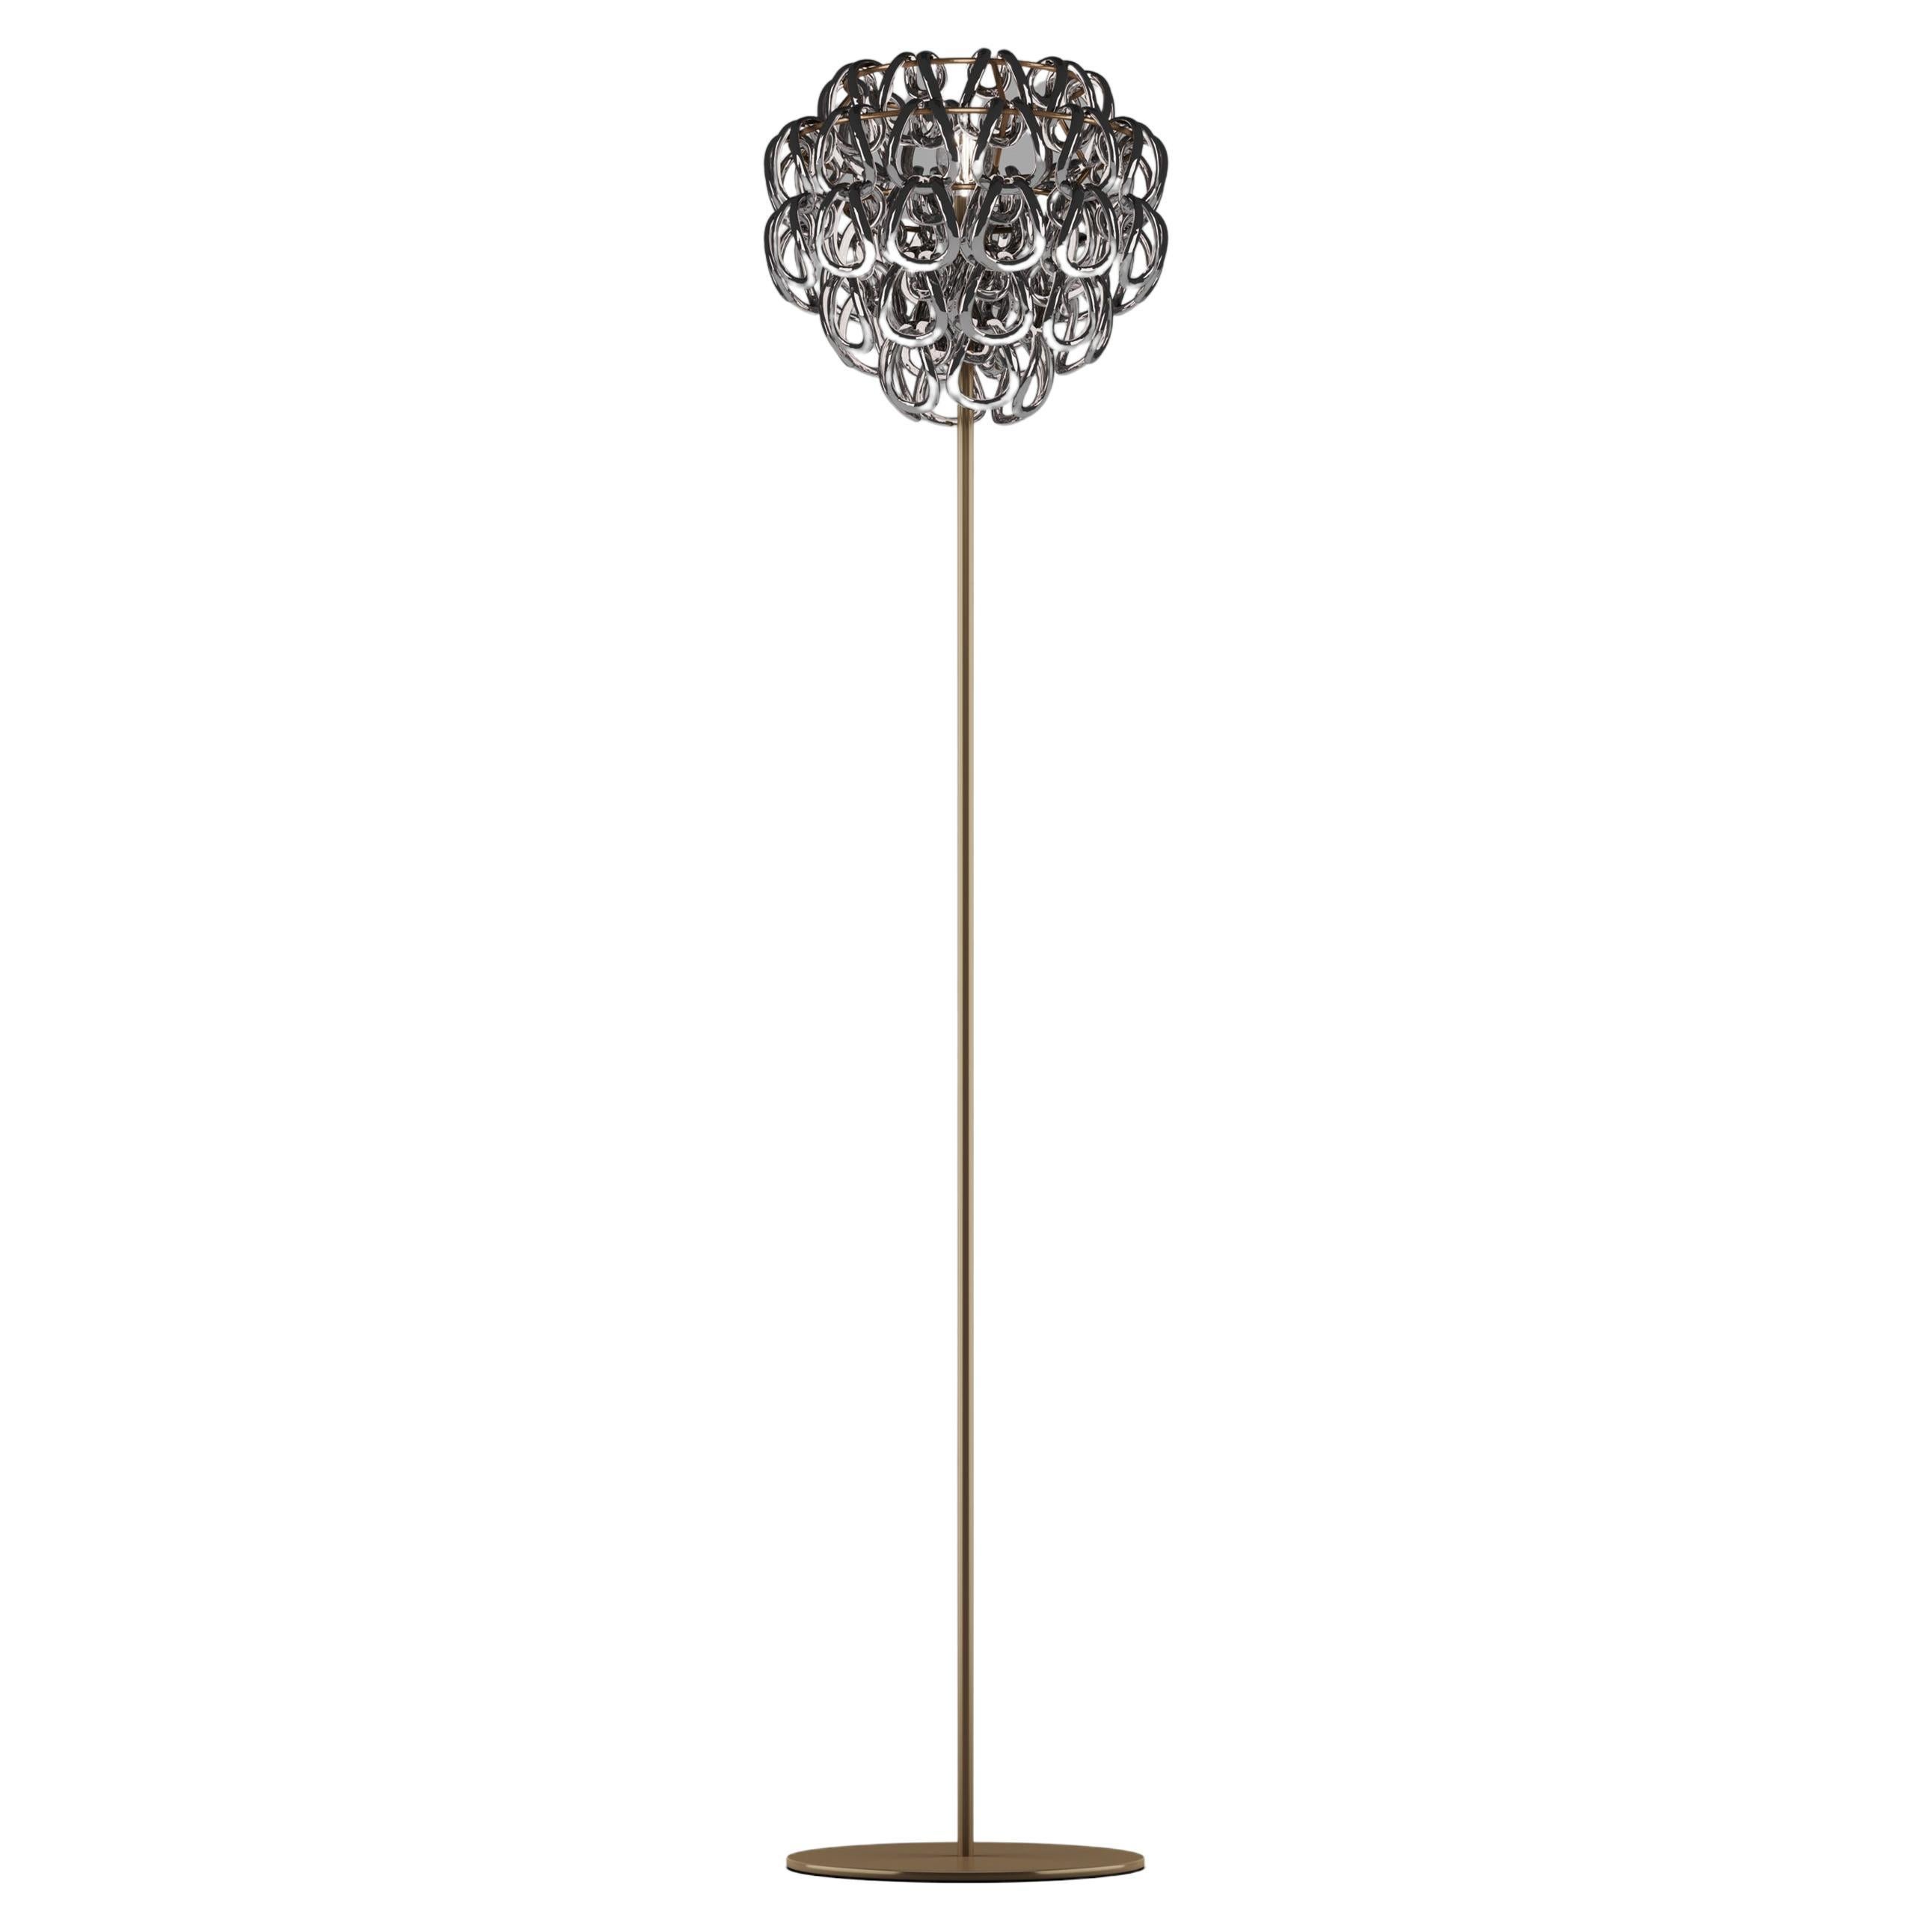 Vistosi Giogali Floor Lamp in Crystal Black Nickel with Matt Bronze Frame